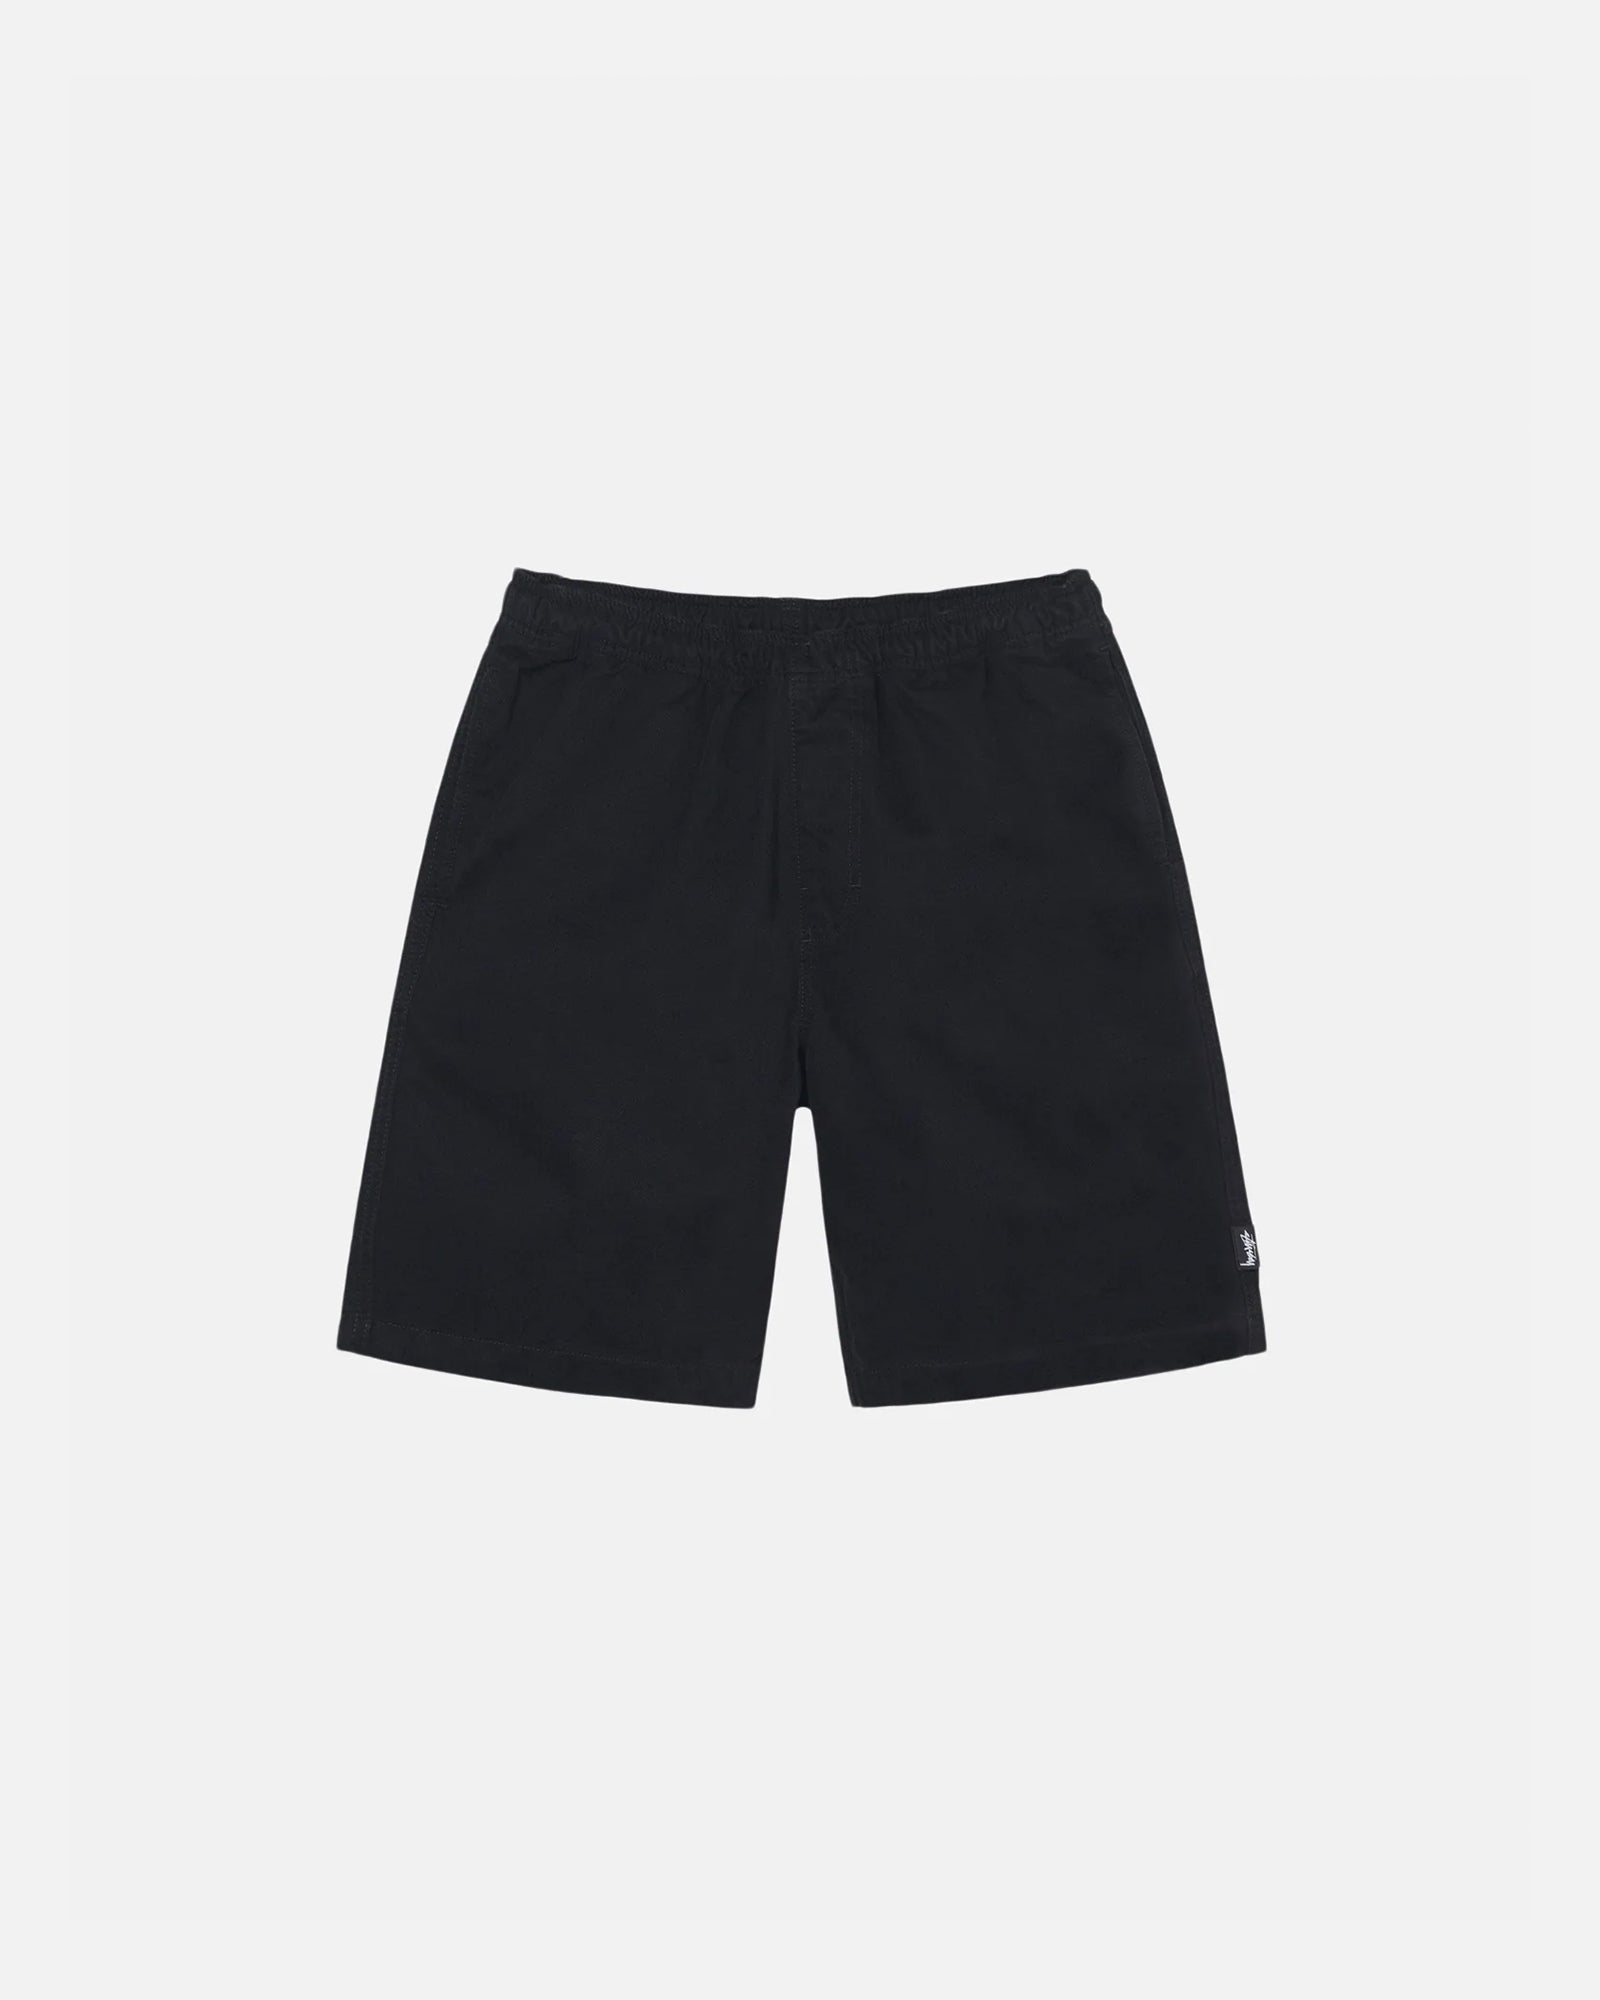 Stüssy Beach Short Brushed Cotton Black Shorts